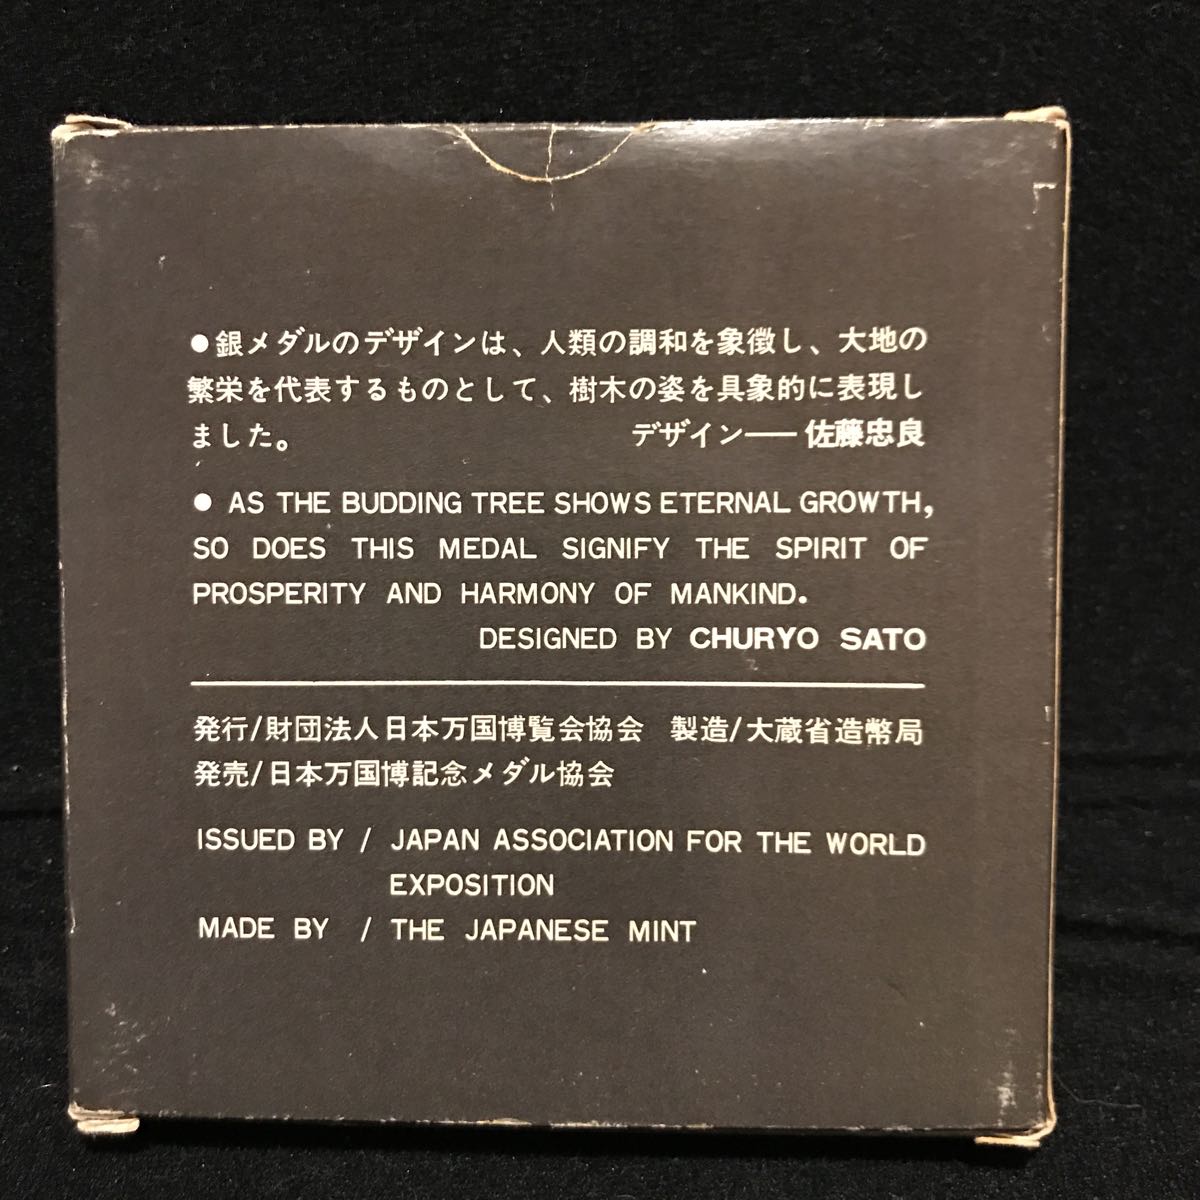 EXPO 70 エキスポ メダル シルバー 銀 日本万博博覧会記念メダル ケース入り 未使用 写真通り箱は劣化してます。_画像3